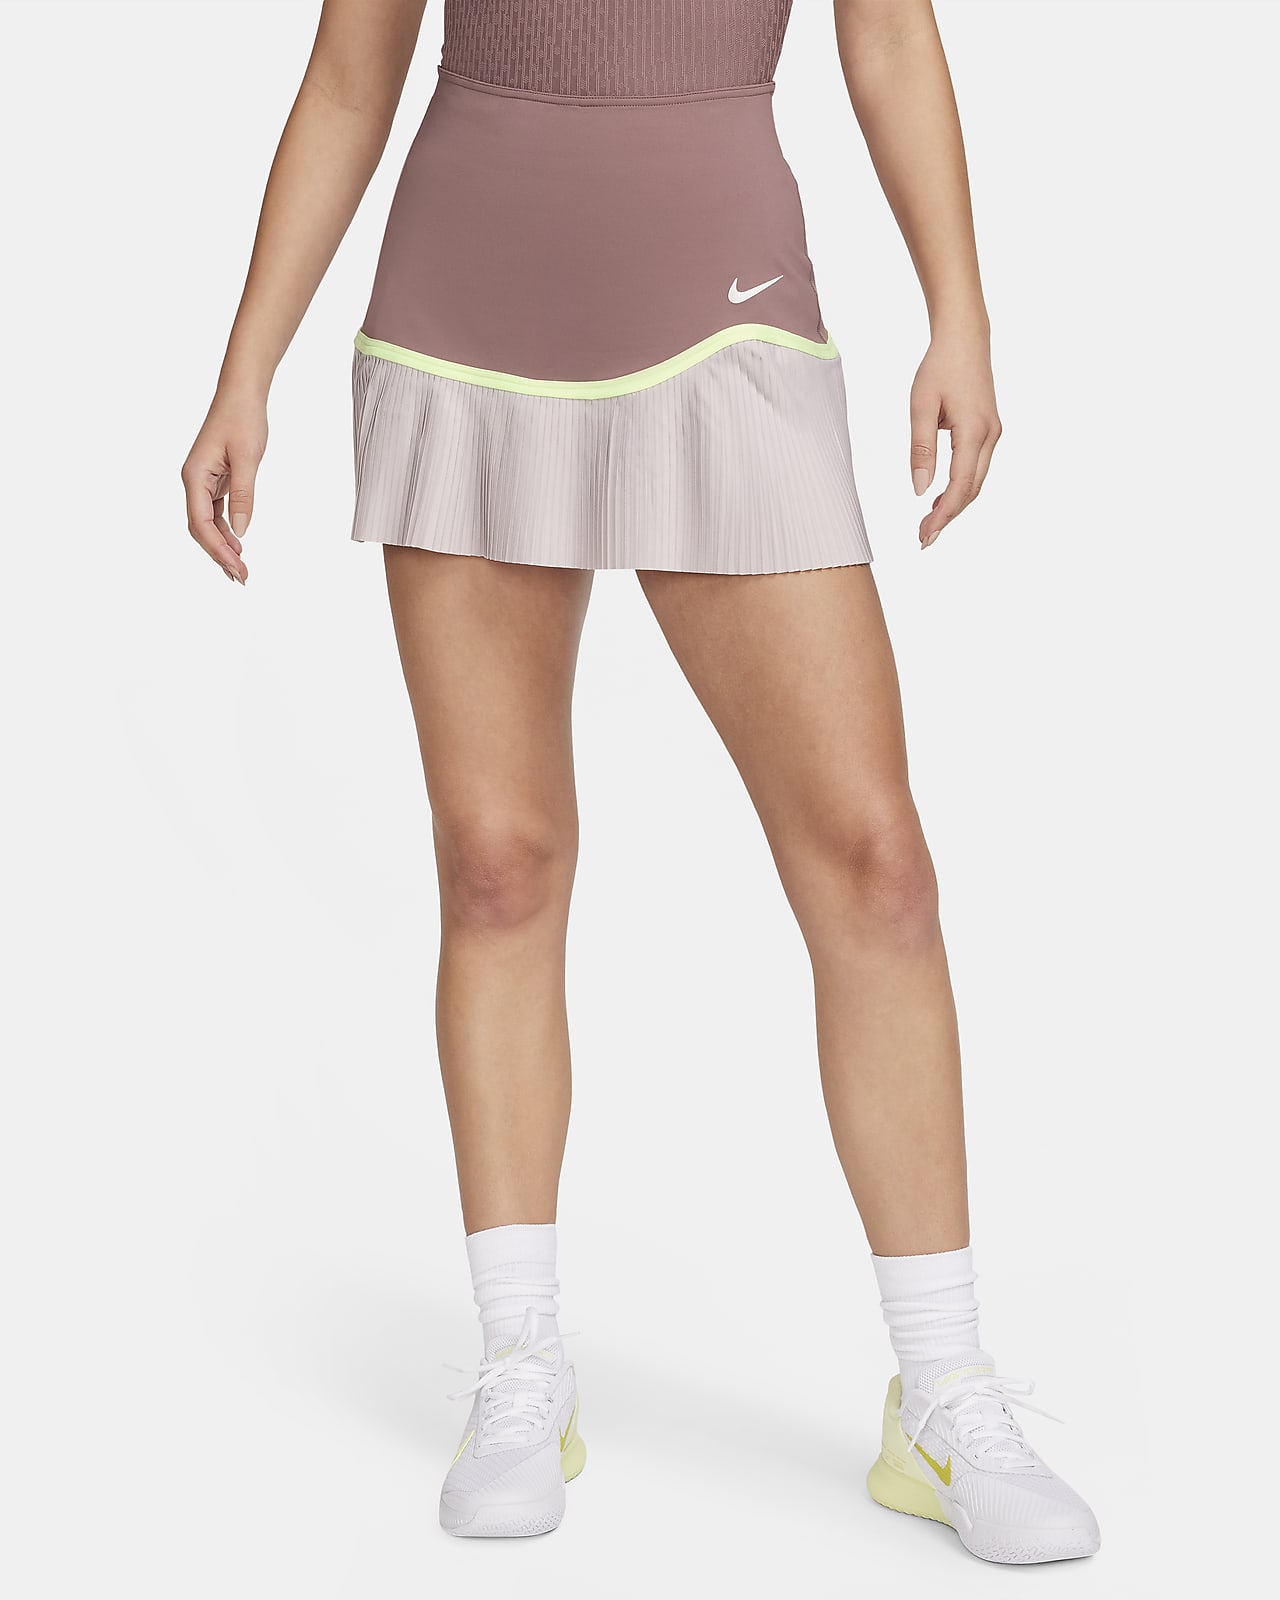 Gonna da tennis Dri-FIT Nike Advantage – Donna